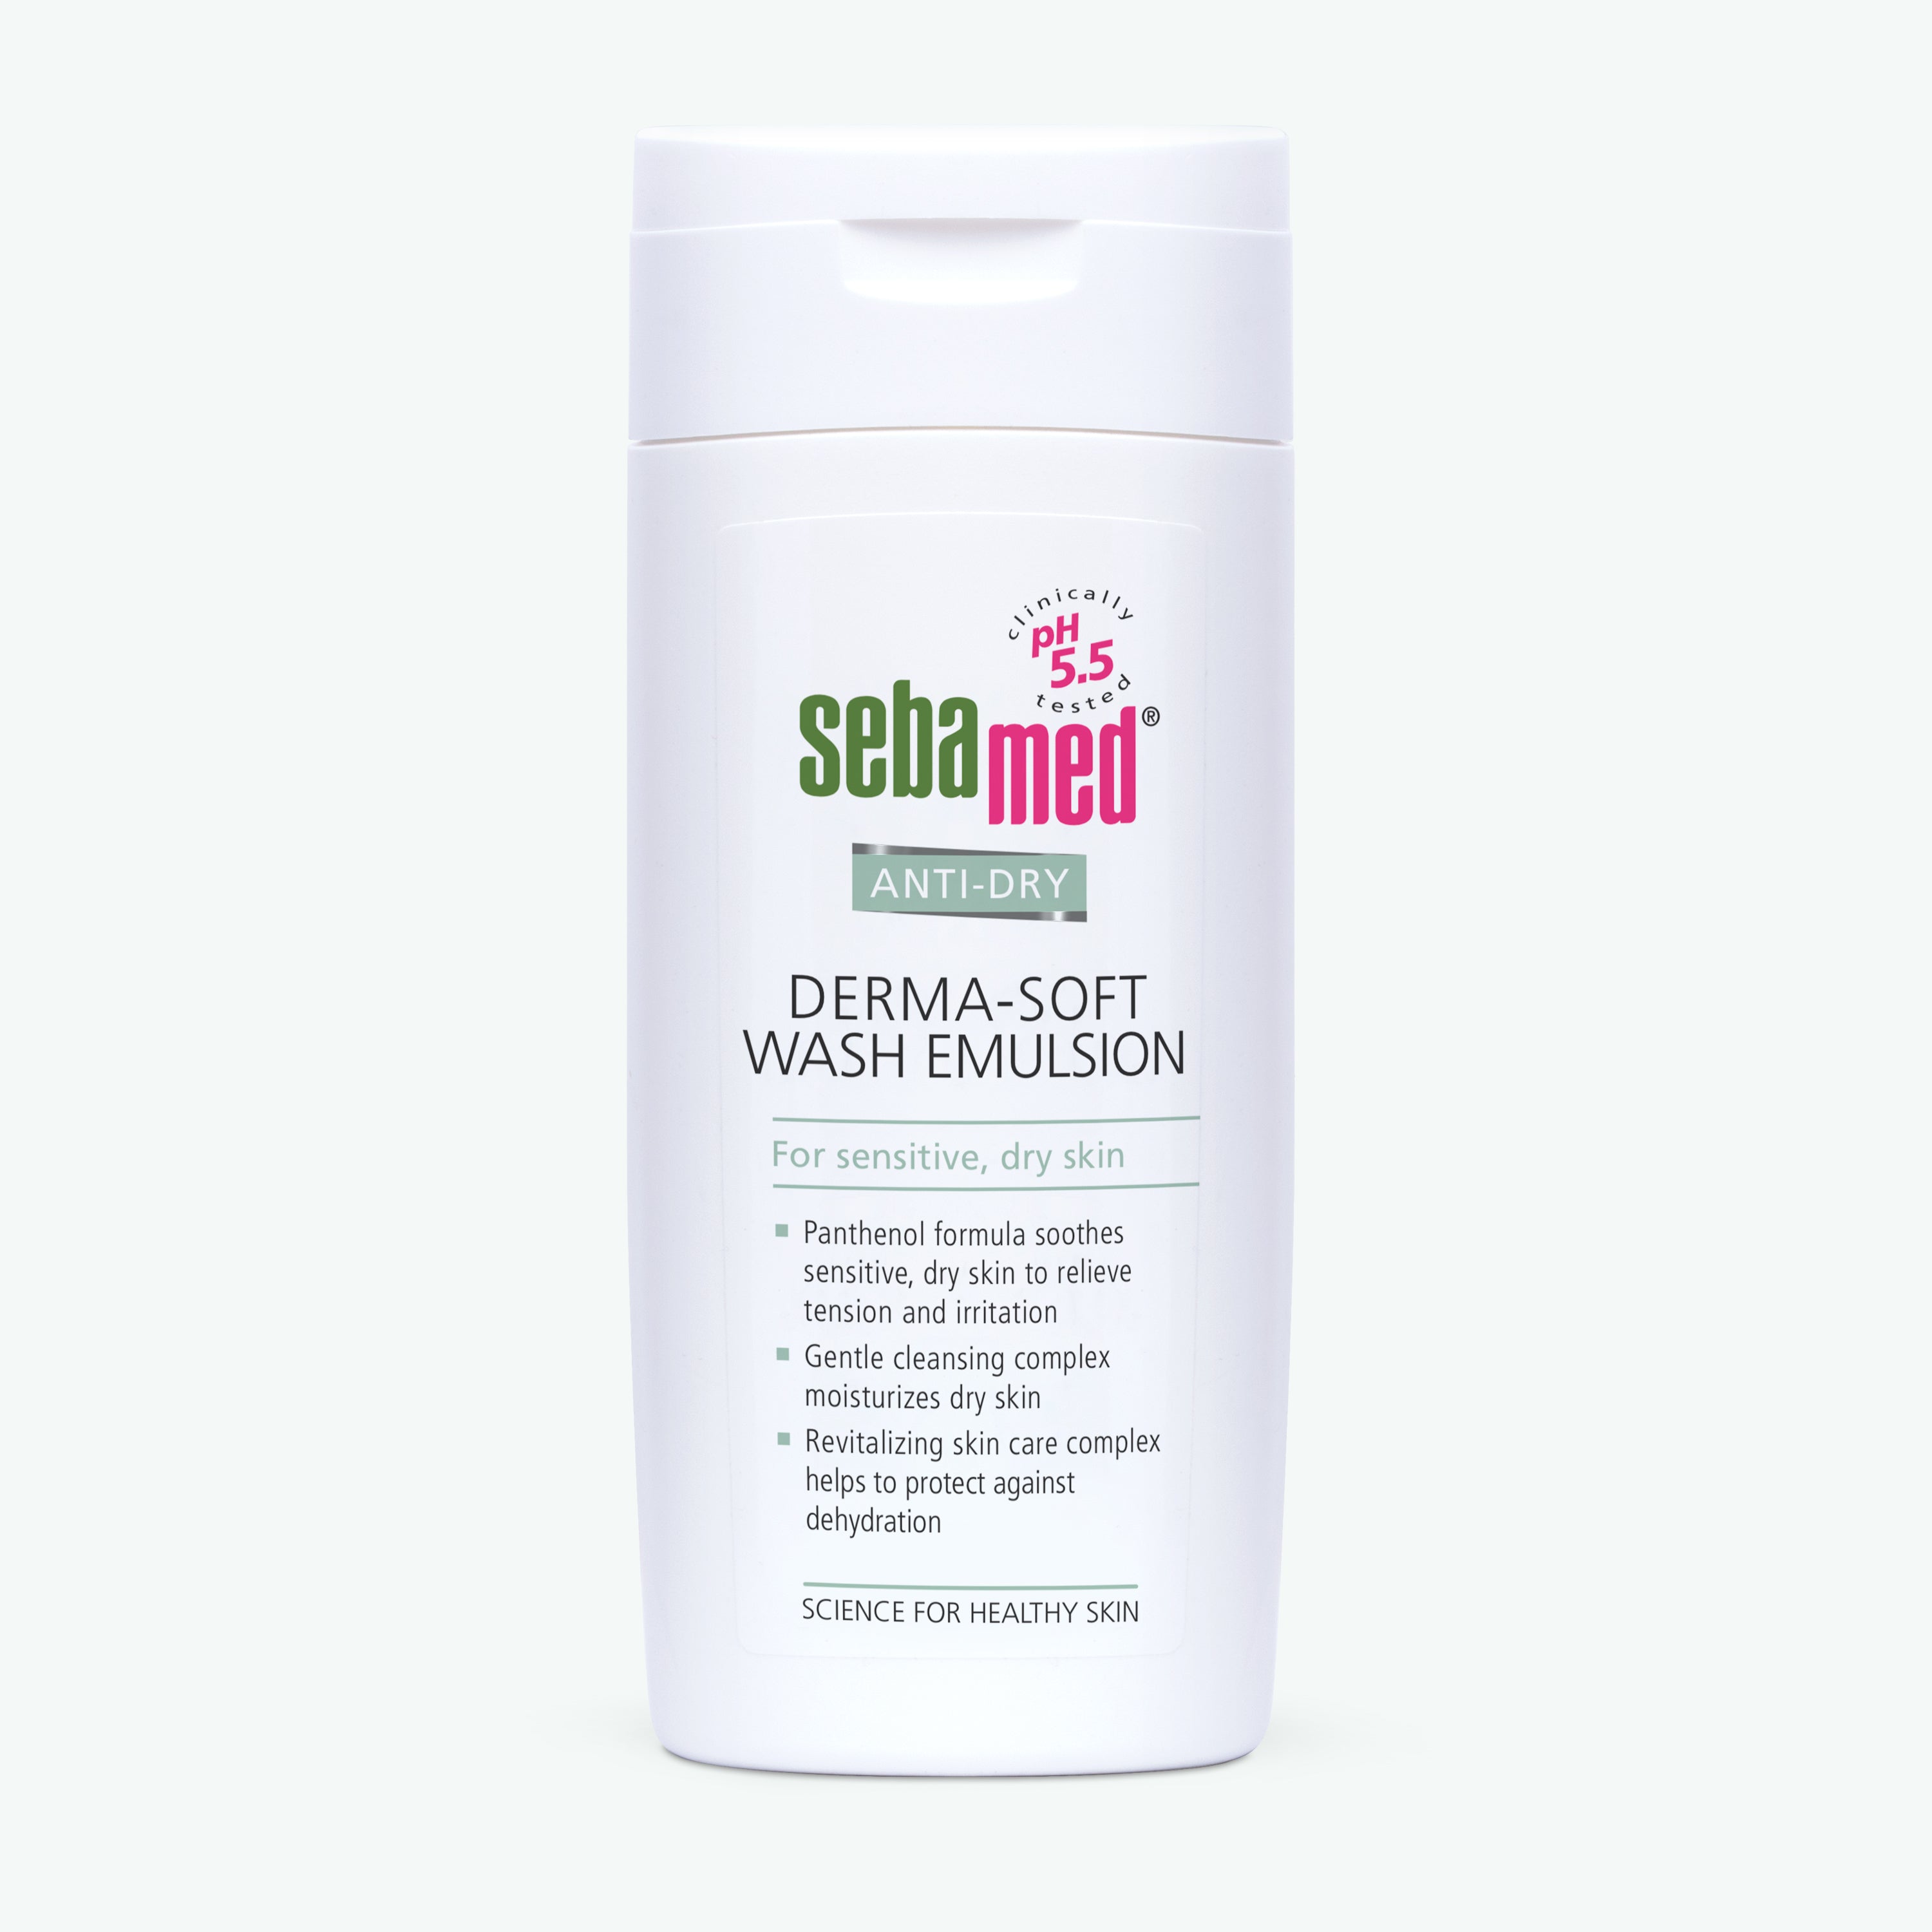 Sebamed Anti-Dry Derma-soft Wash Emulsion